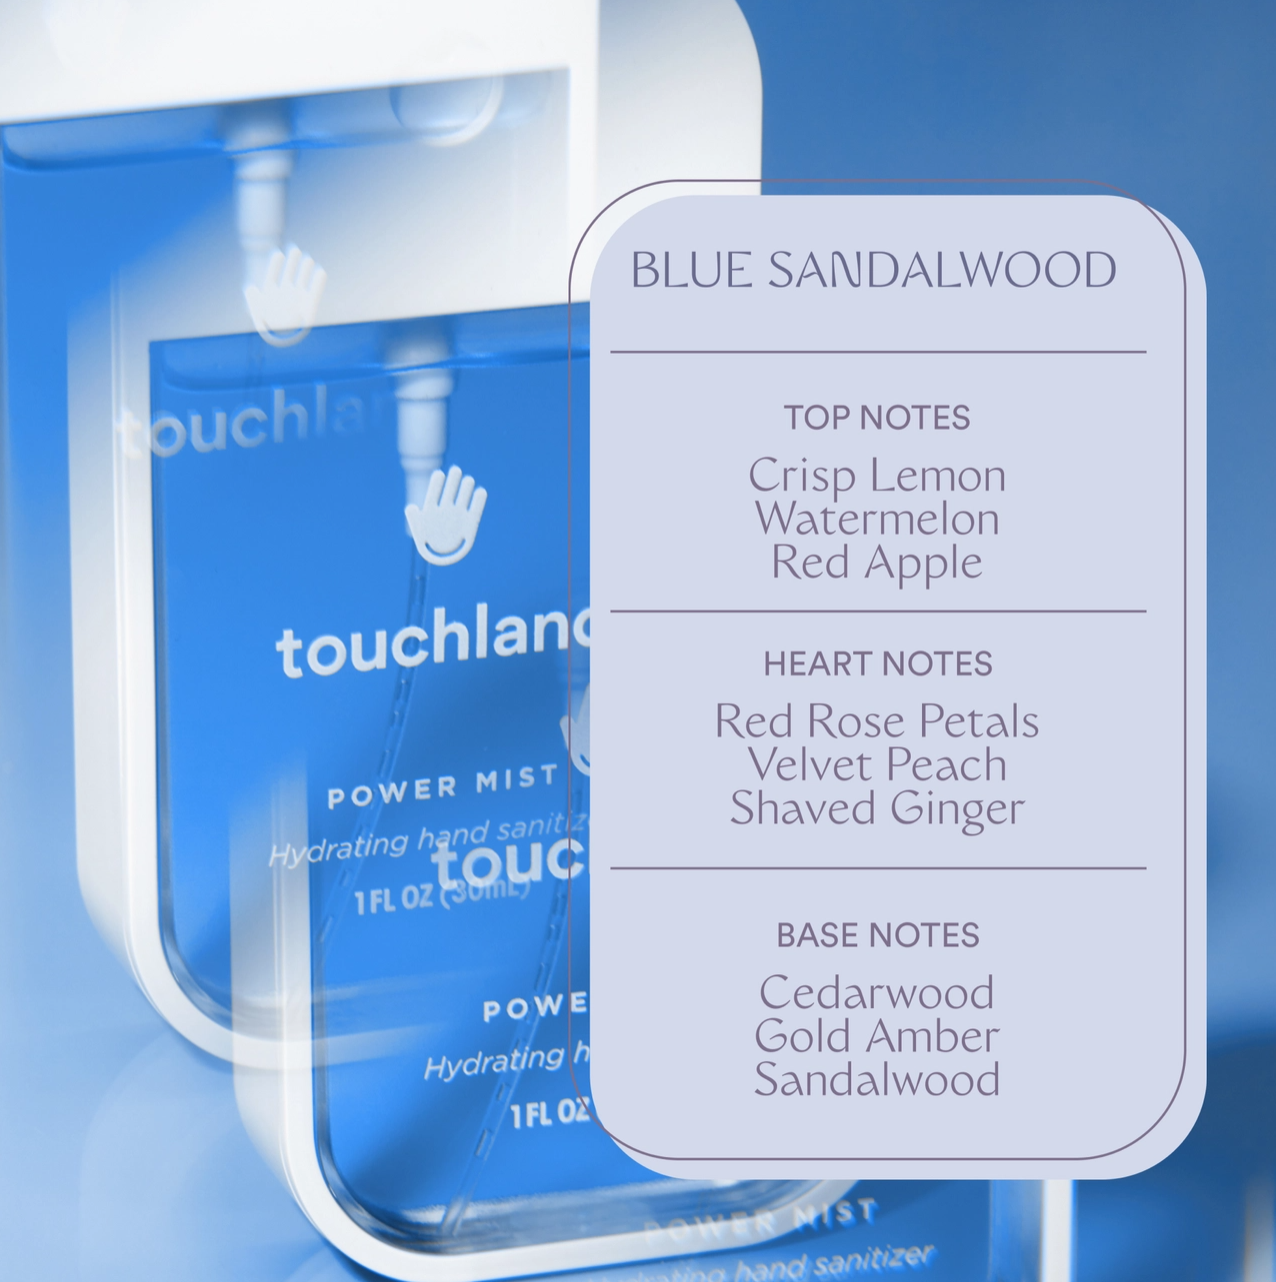 Touchland Power Mist: Blue Sandalwood